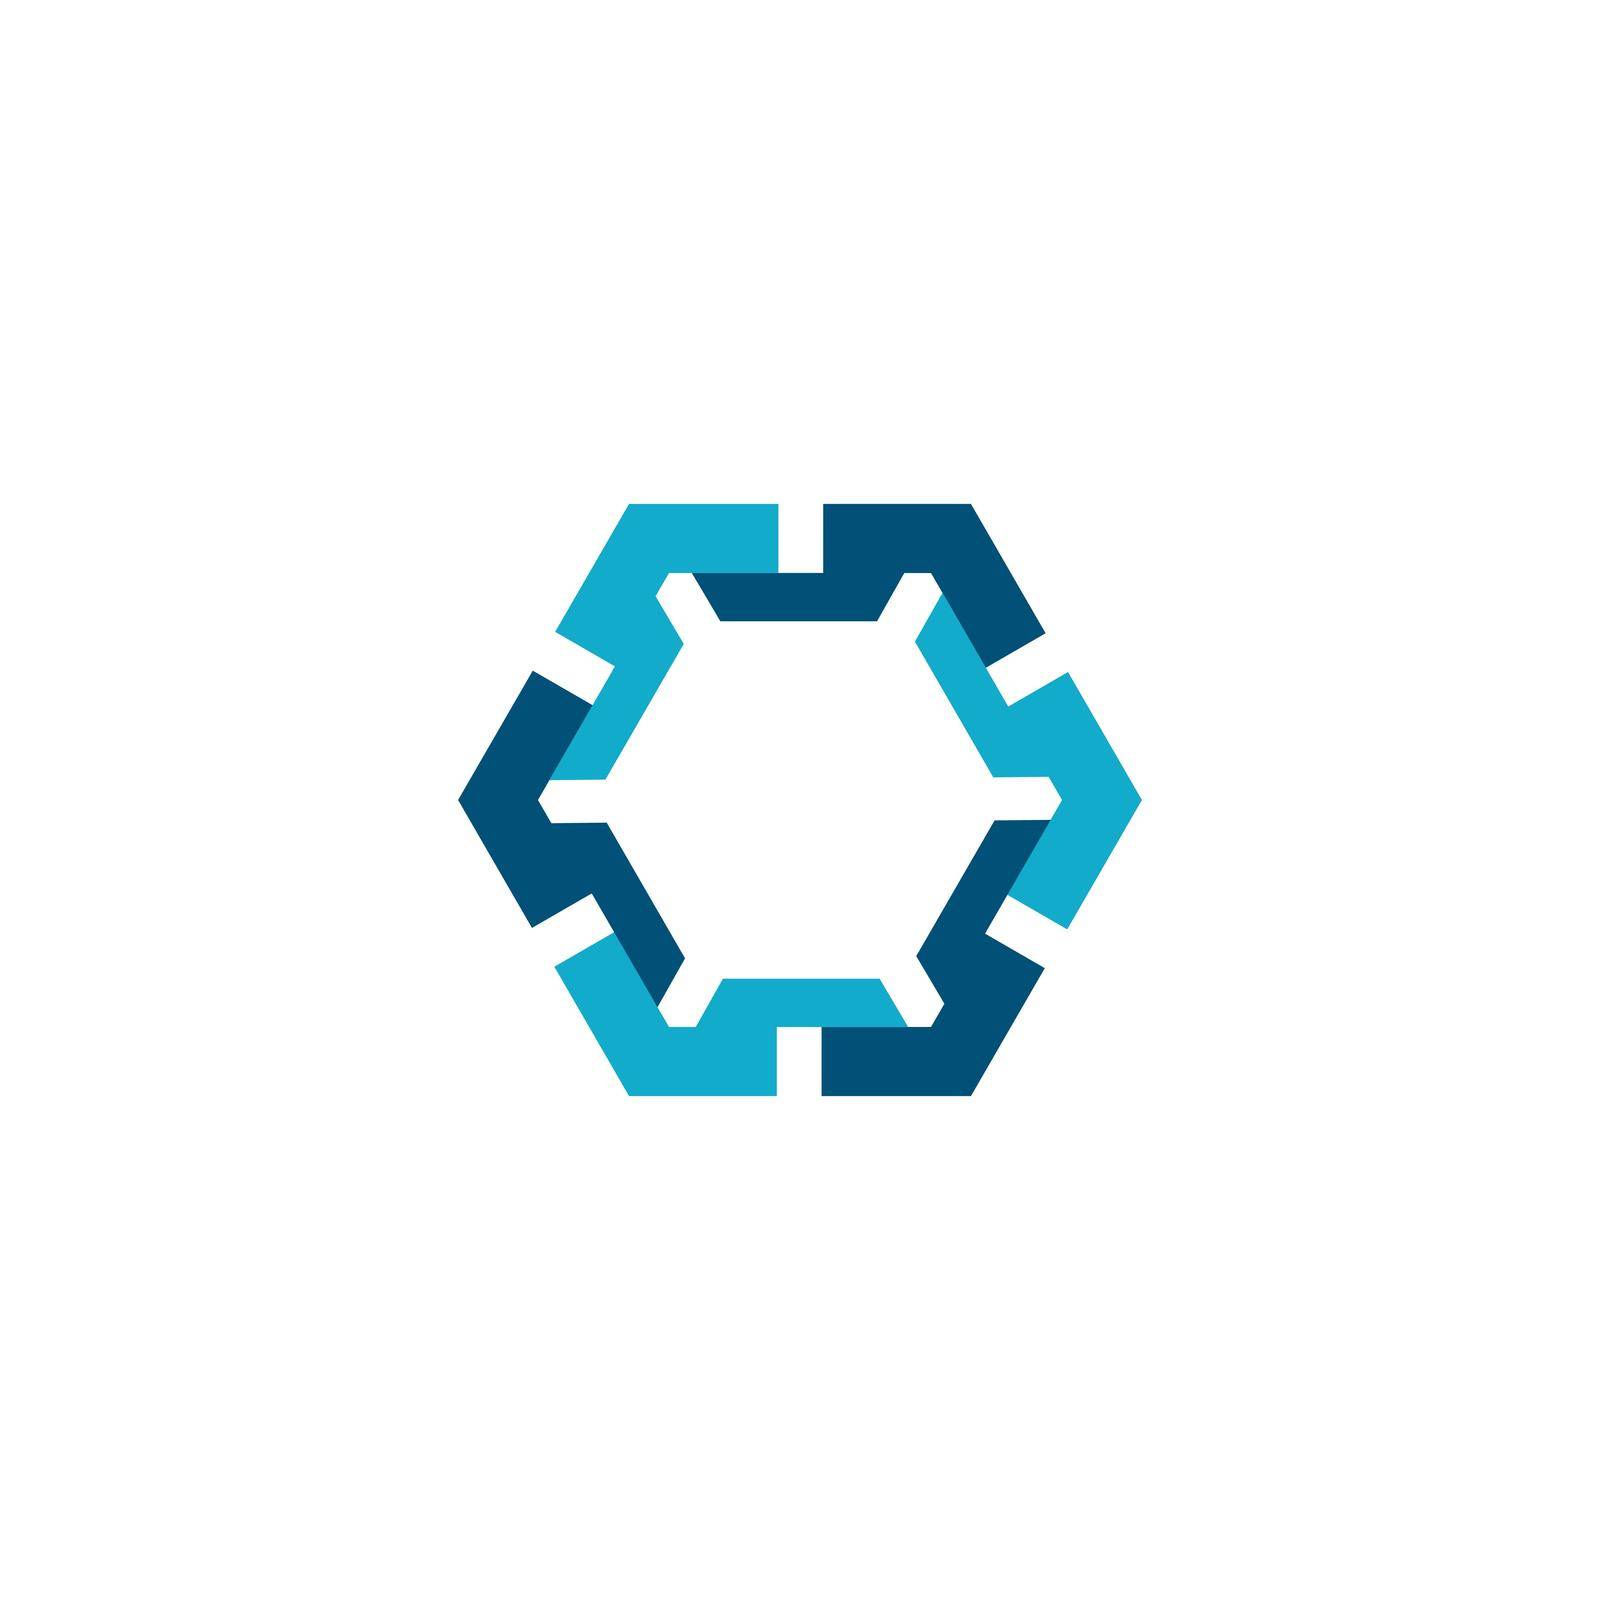 Hexagon logo business vector icon by Fat17